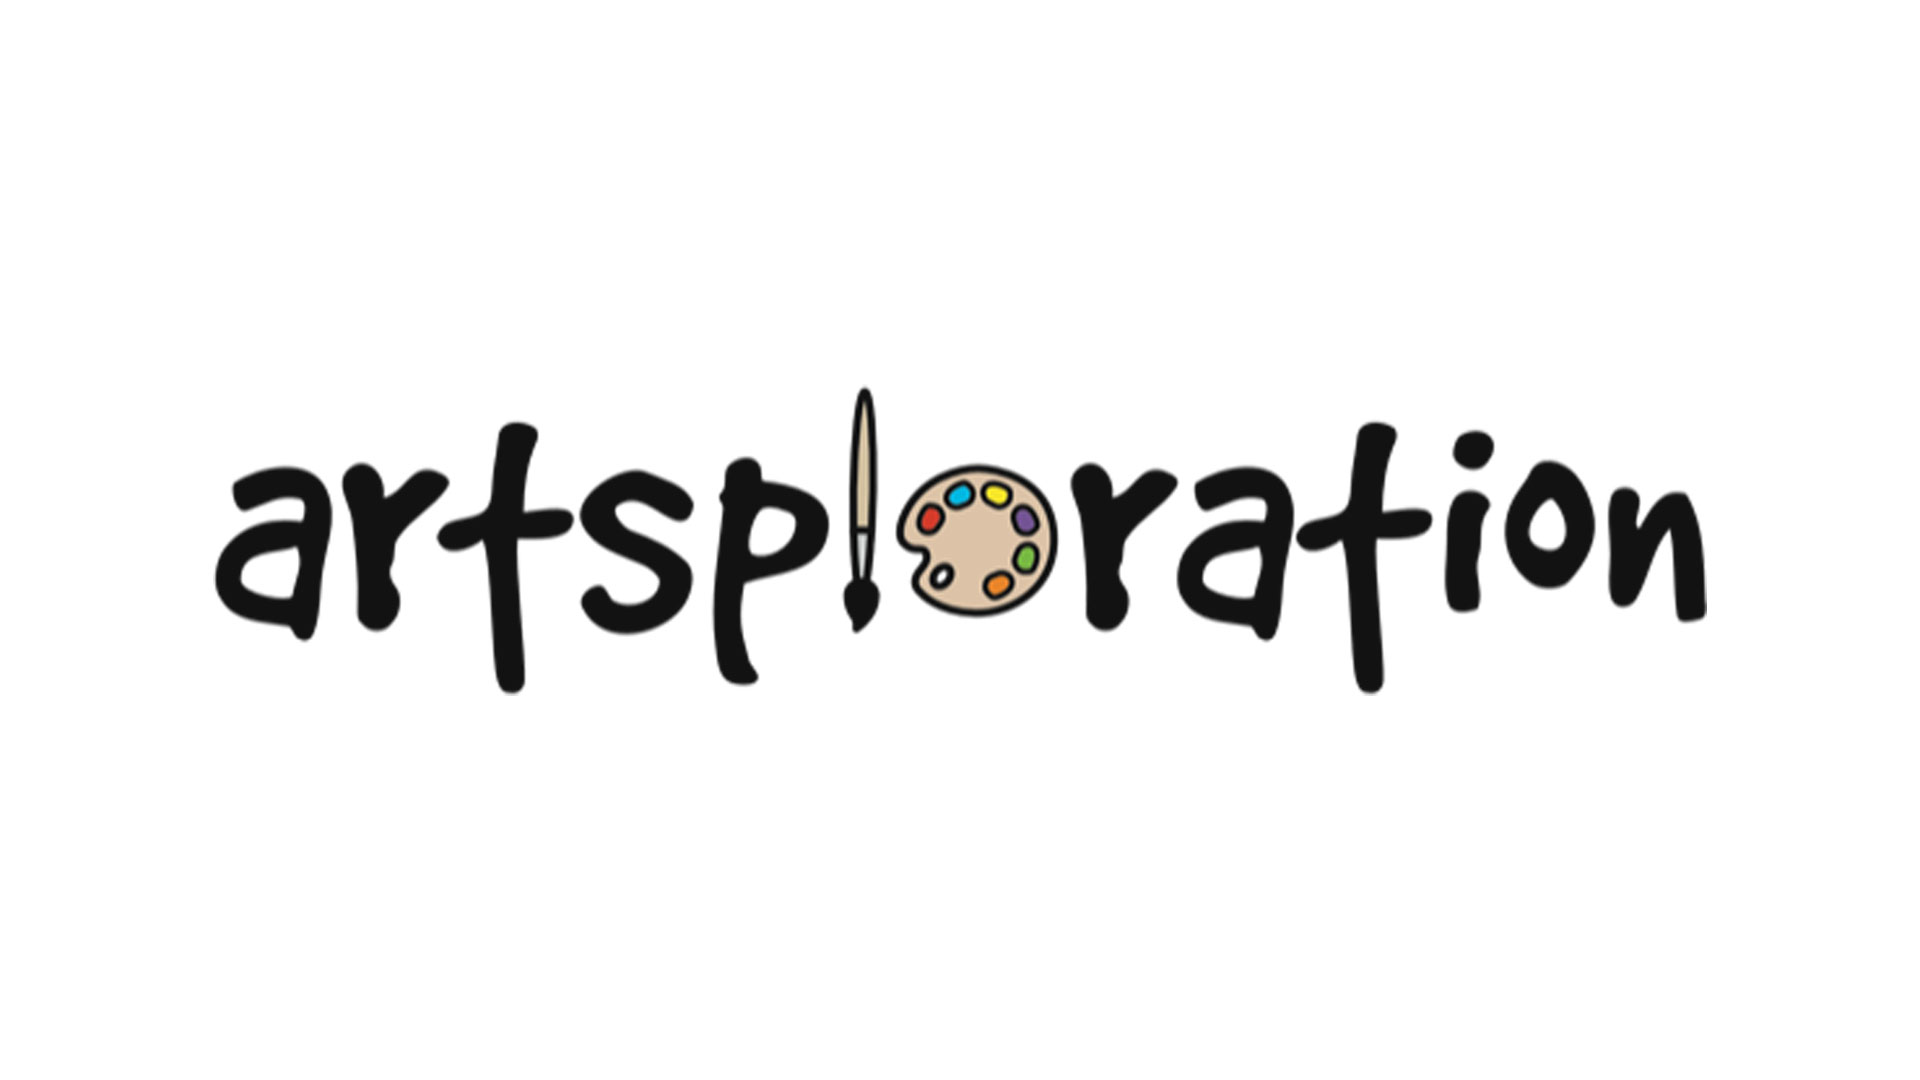 artsploration logo